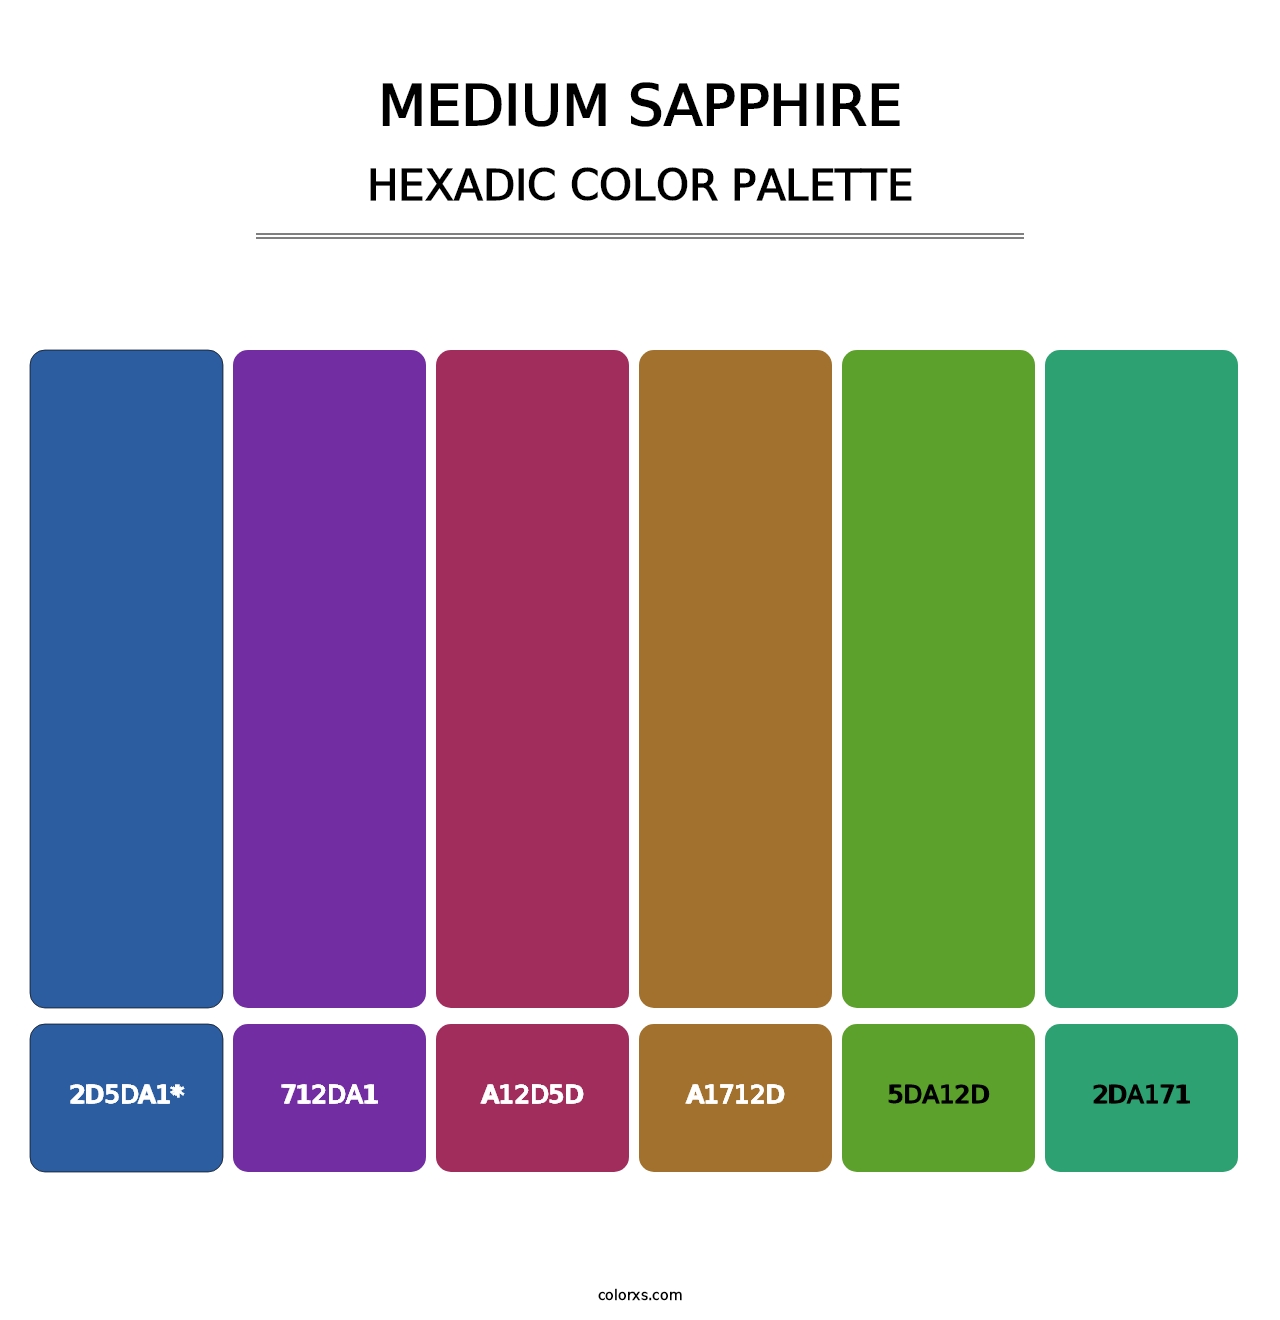 Medium Sapphire - Hexadic Color Palette